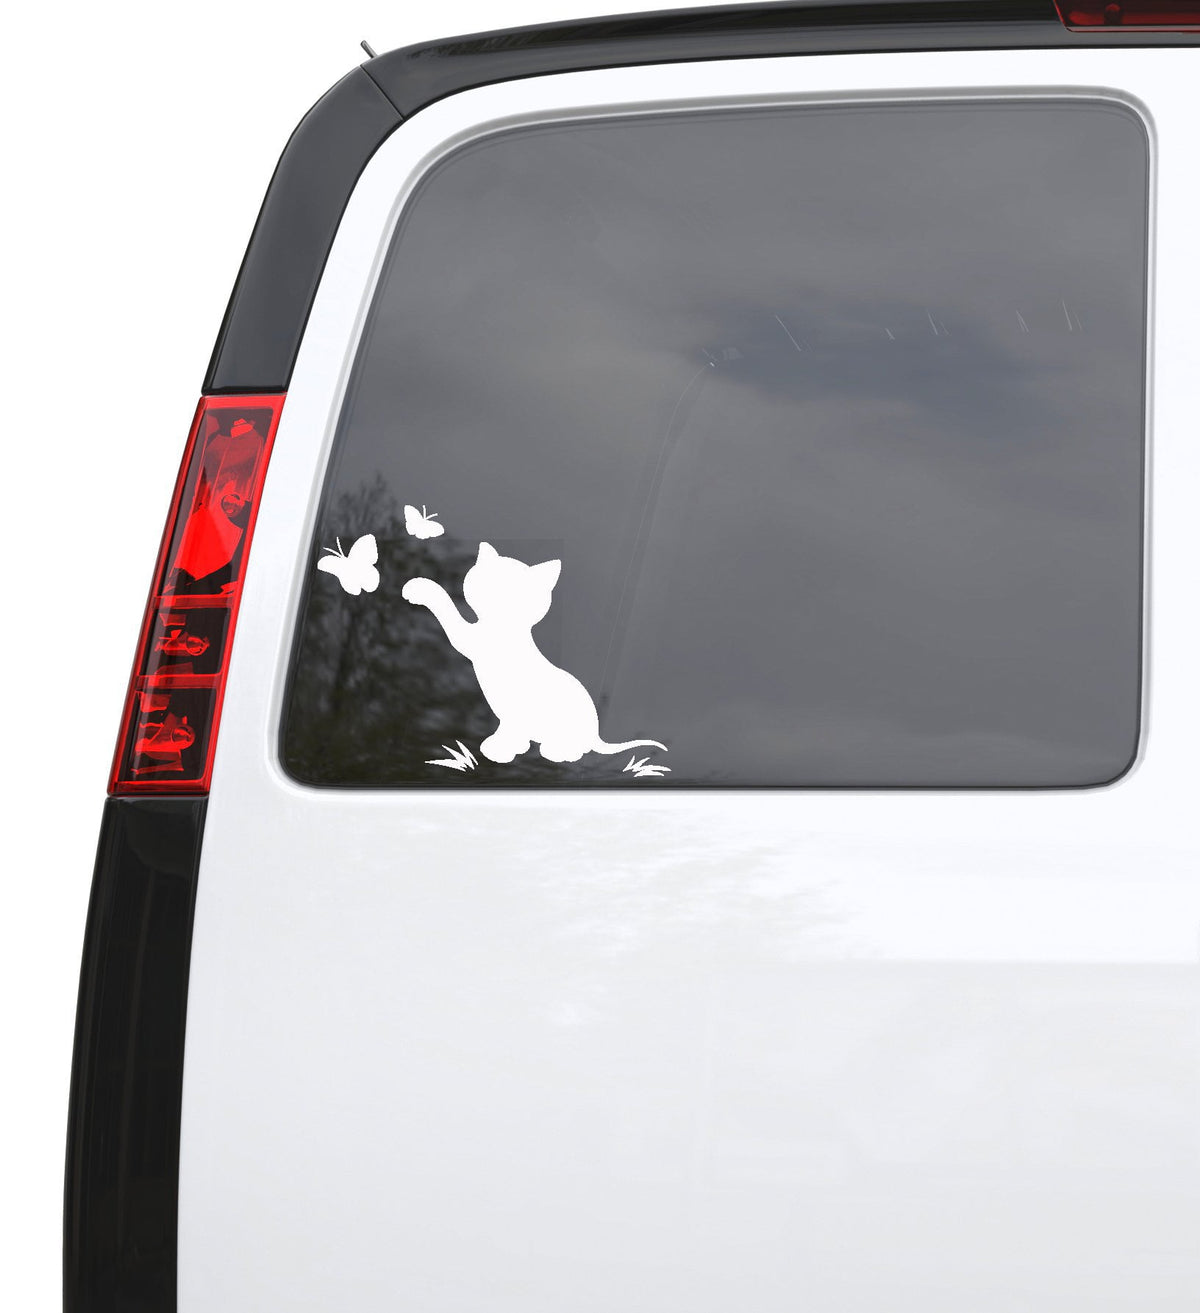 Calico Cat Sticker - Sticker Graphic - Auto, Wall, Laptop, Cell, Truck  Sticker for Windows, Cars, Trucks